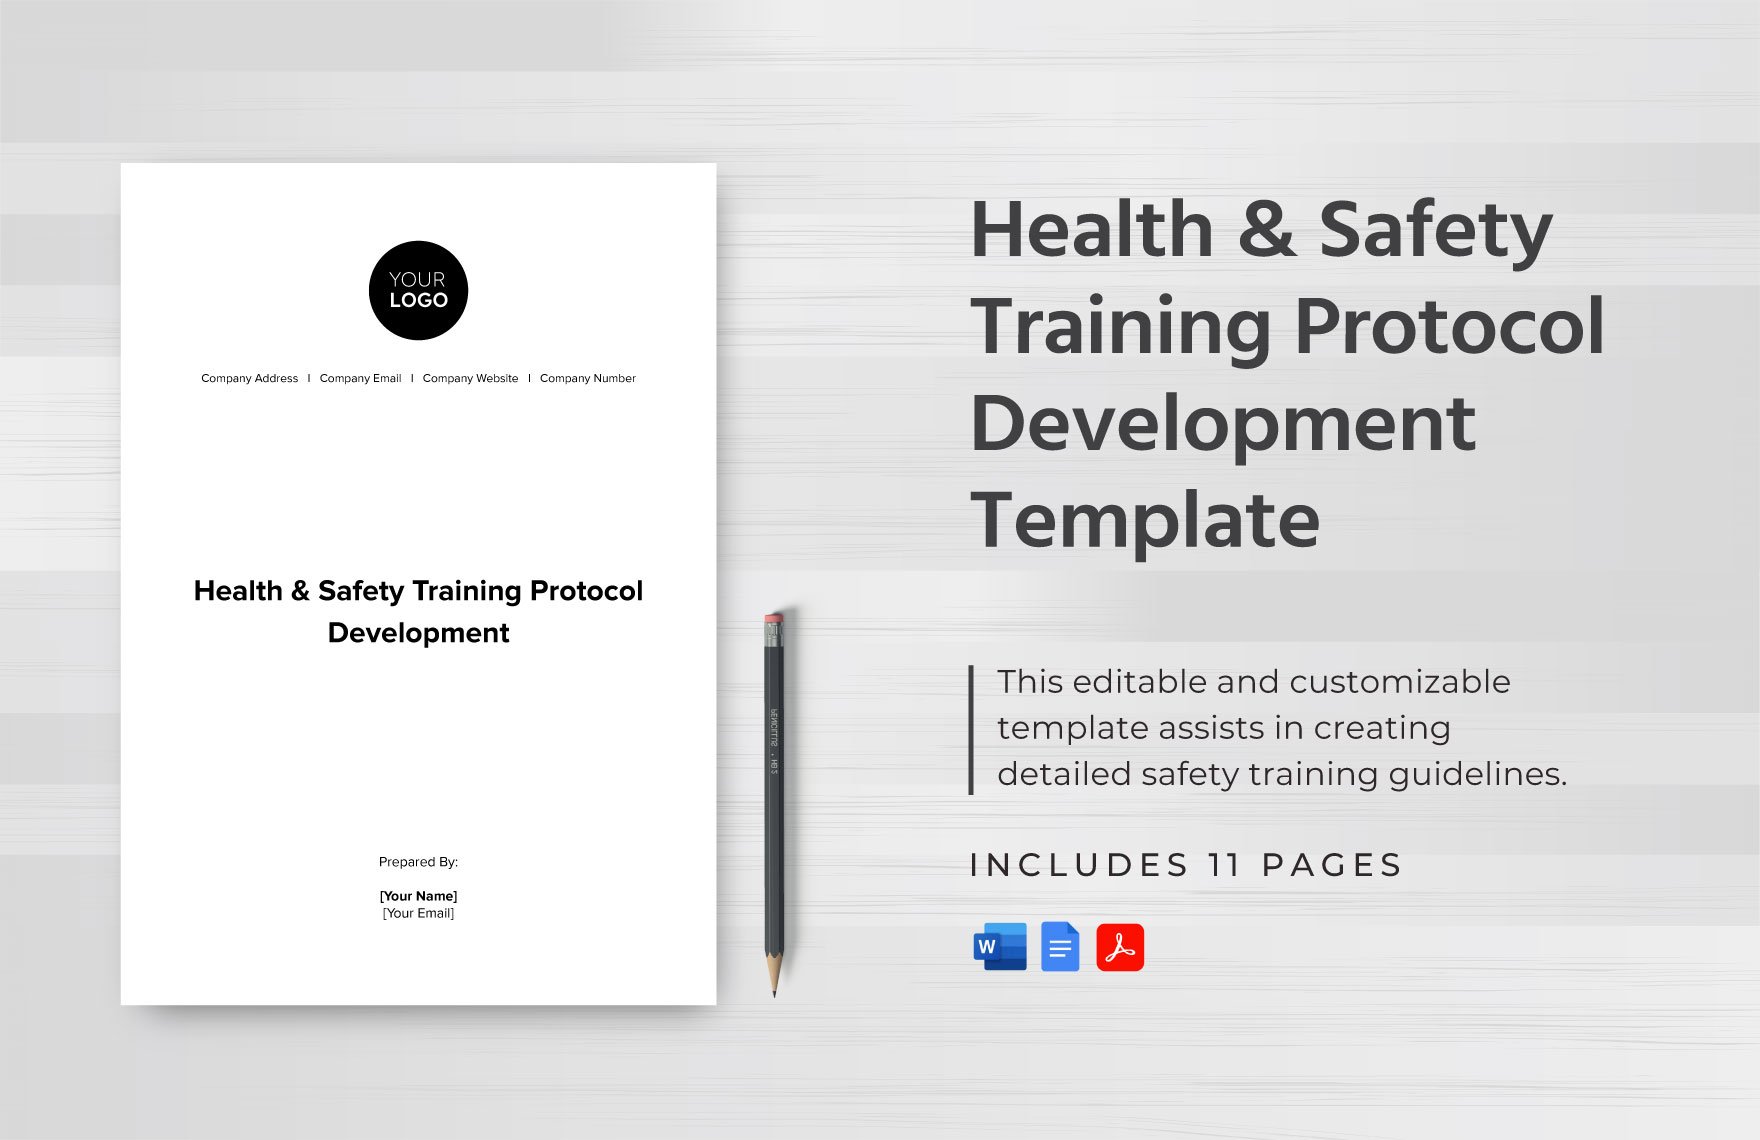 Health & Safety Training Protocol Development Template